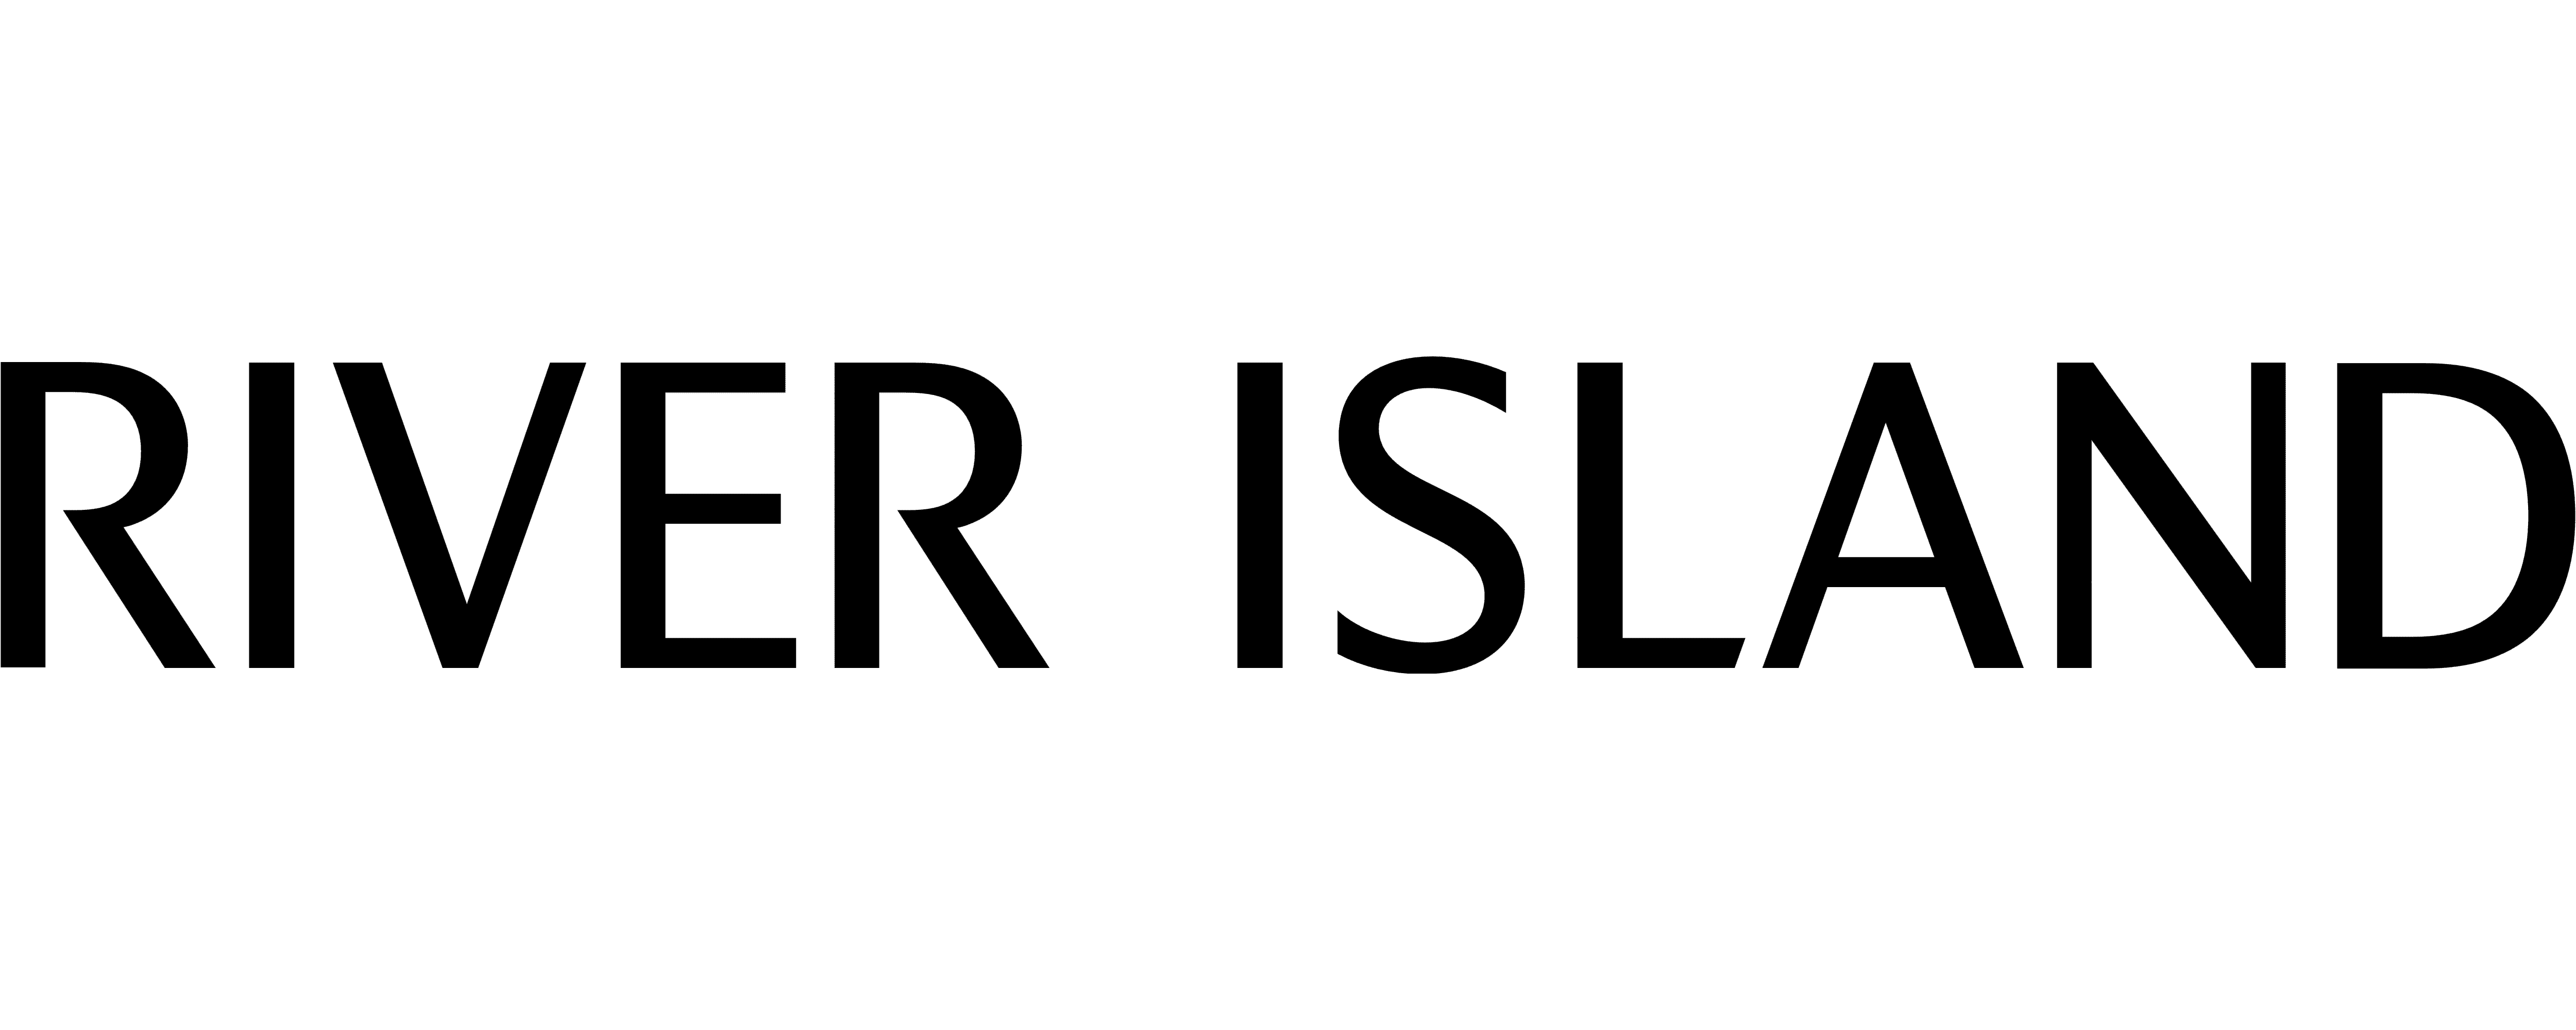 River Island Clothing Company